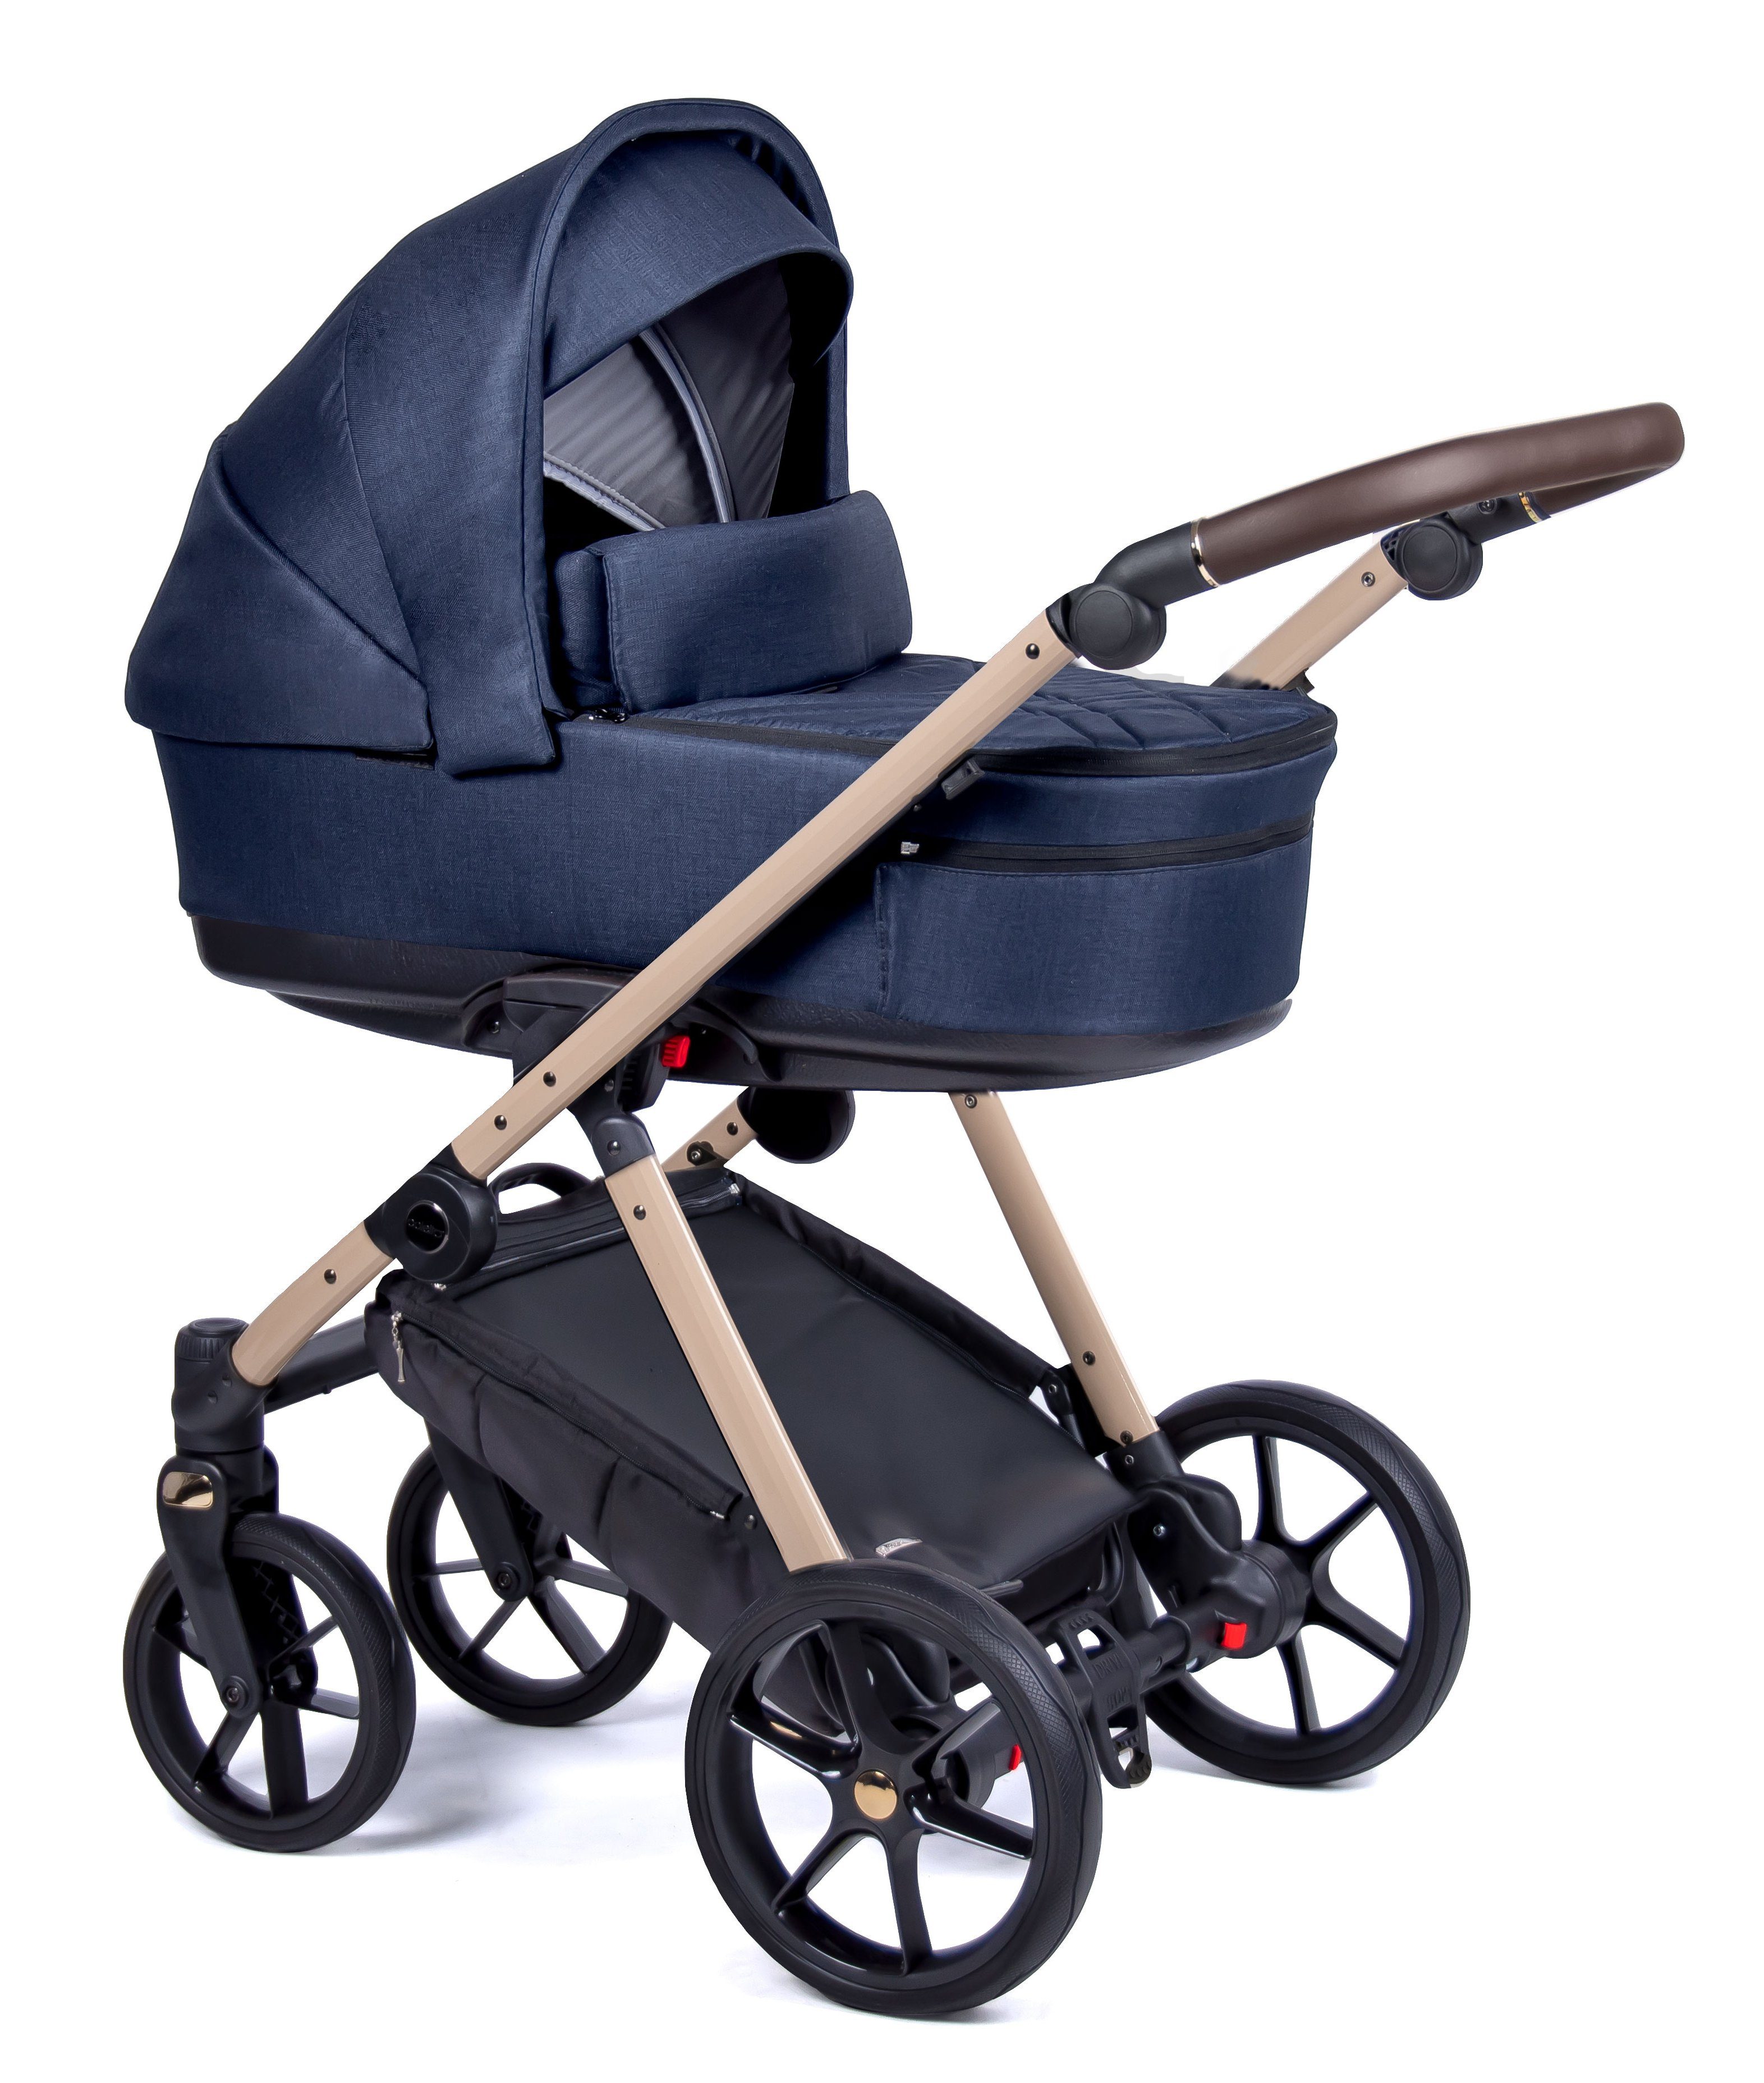 babies-on-wheels 1 - Designs beige Axxis Navy gestell in Kombi-Kinderwagen Teile - = in 3 Kinderwagen-Set 24 15